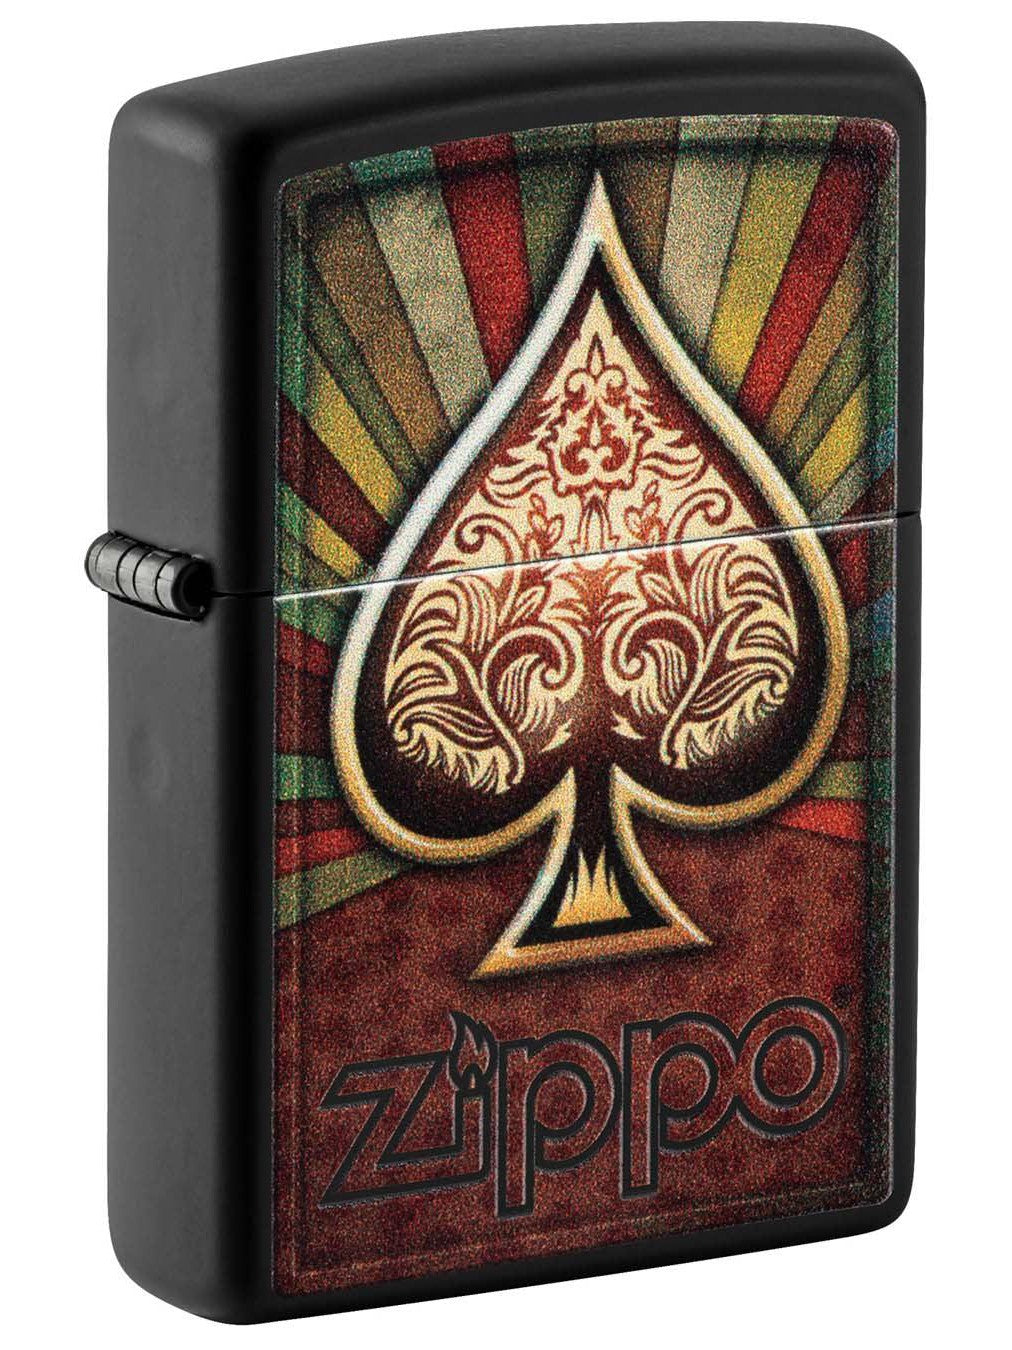 Zippo Lighter: Spade Design - Black Matte 49917